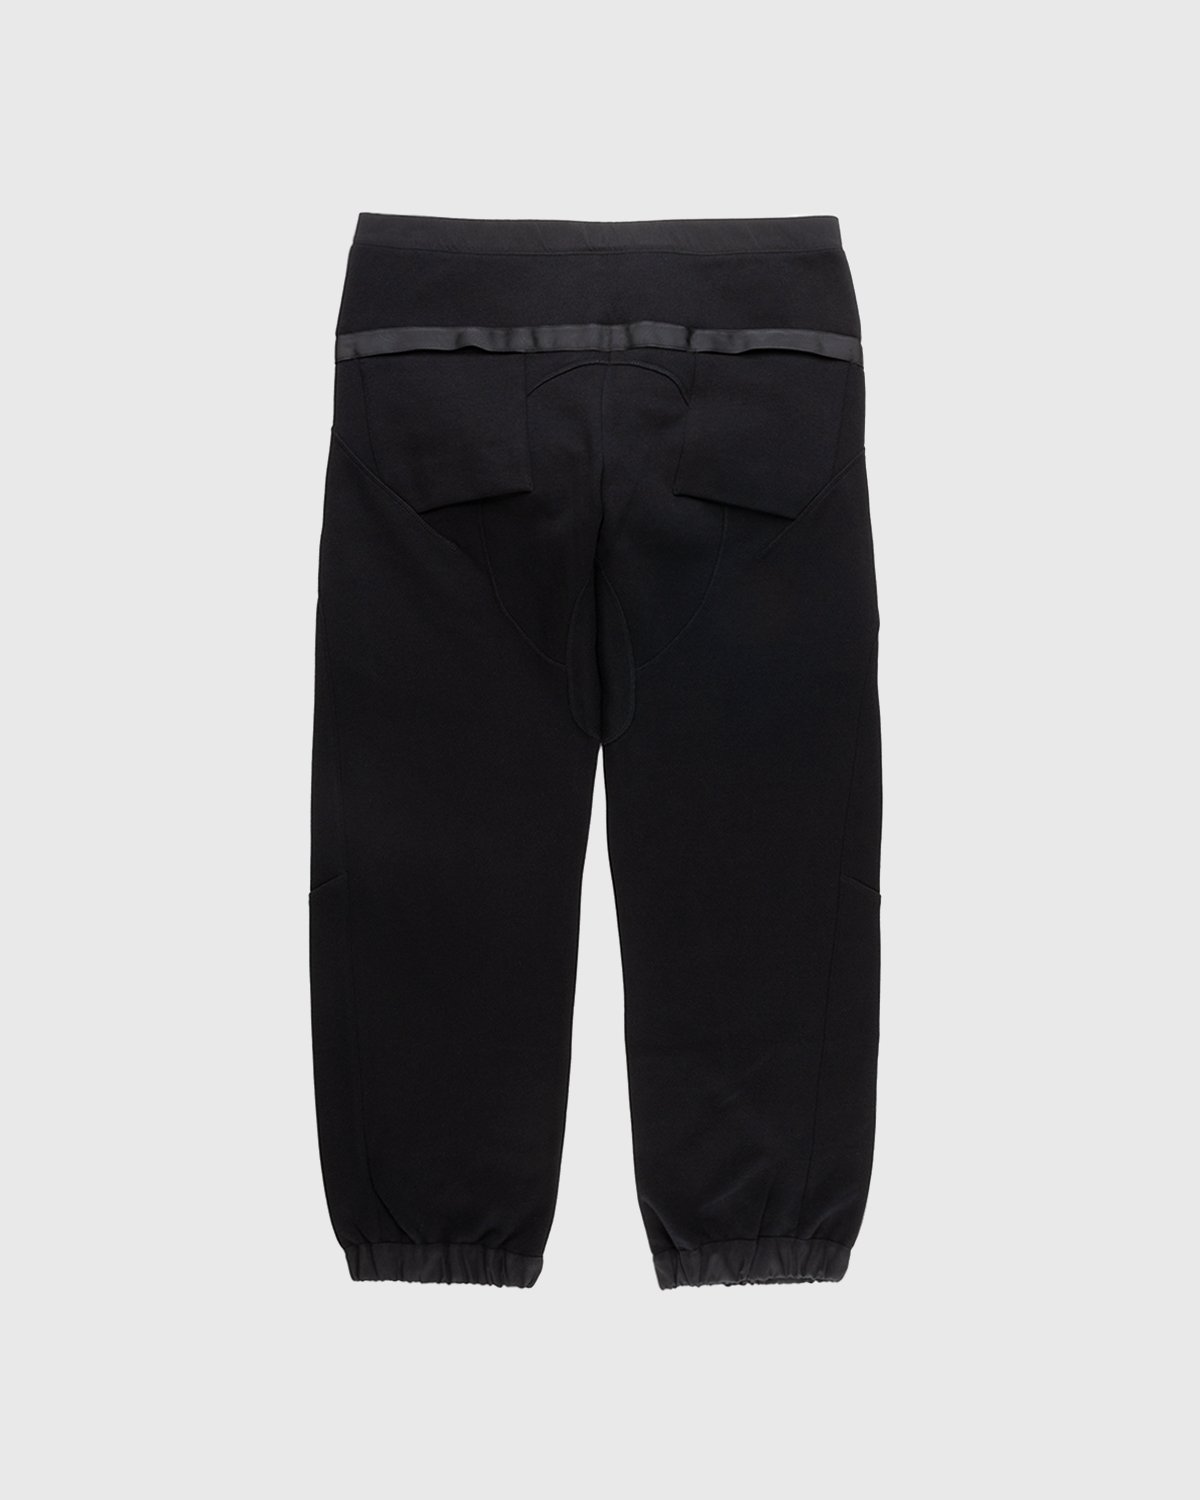 ACRONYM - P39-PR Pants Black - Clothing - Black - Image 2